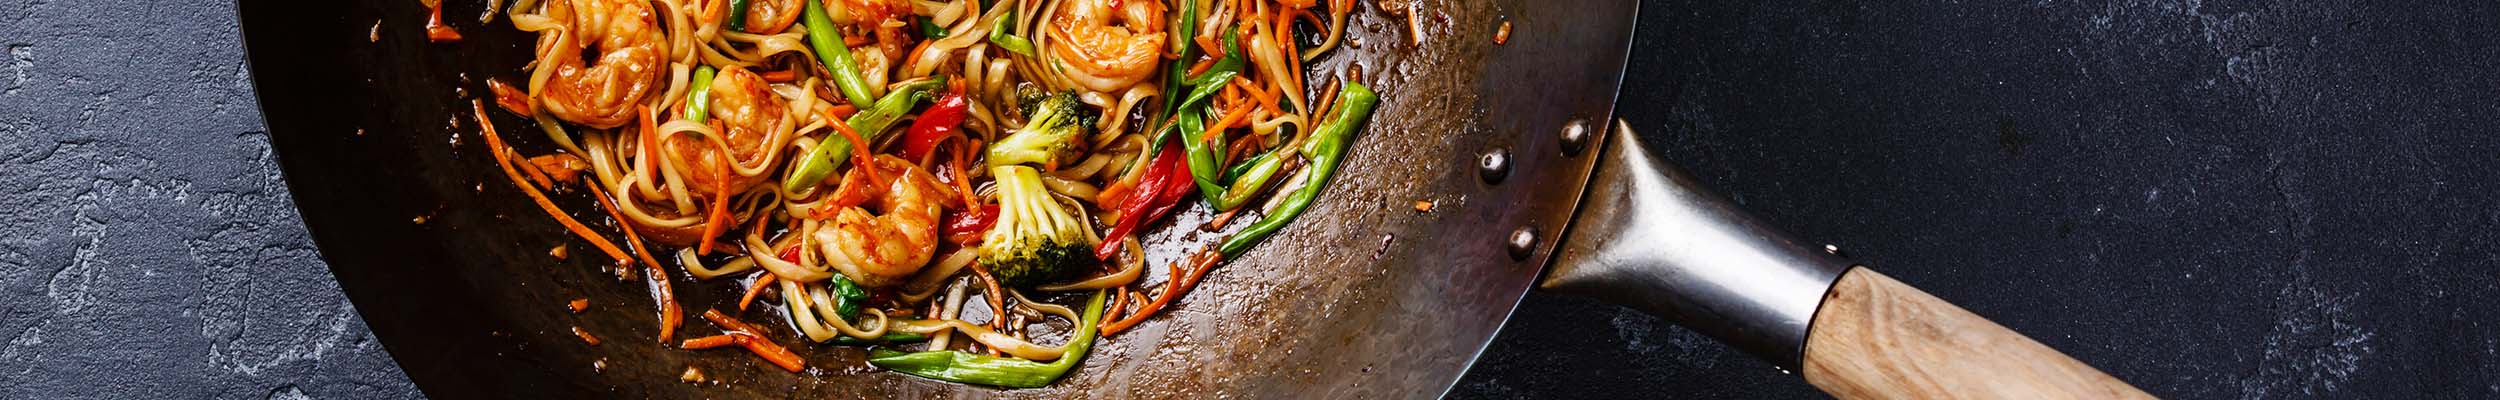 Carbon Steel wok with shrimp and noodle stir fry